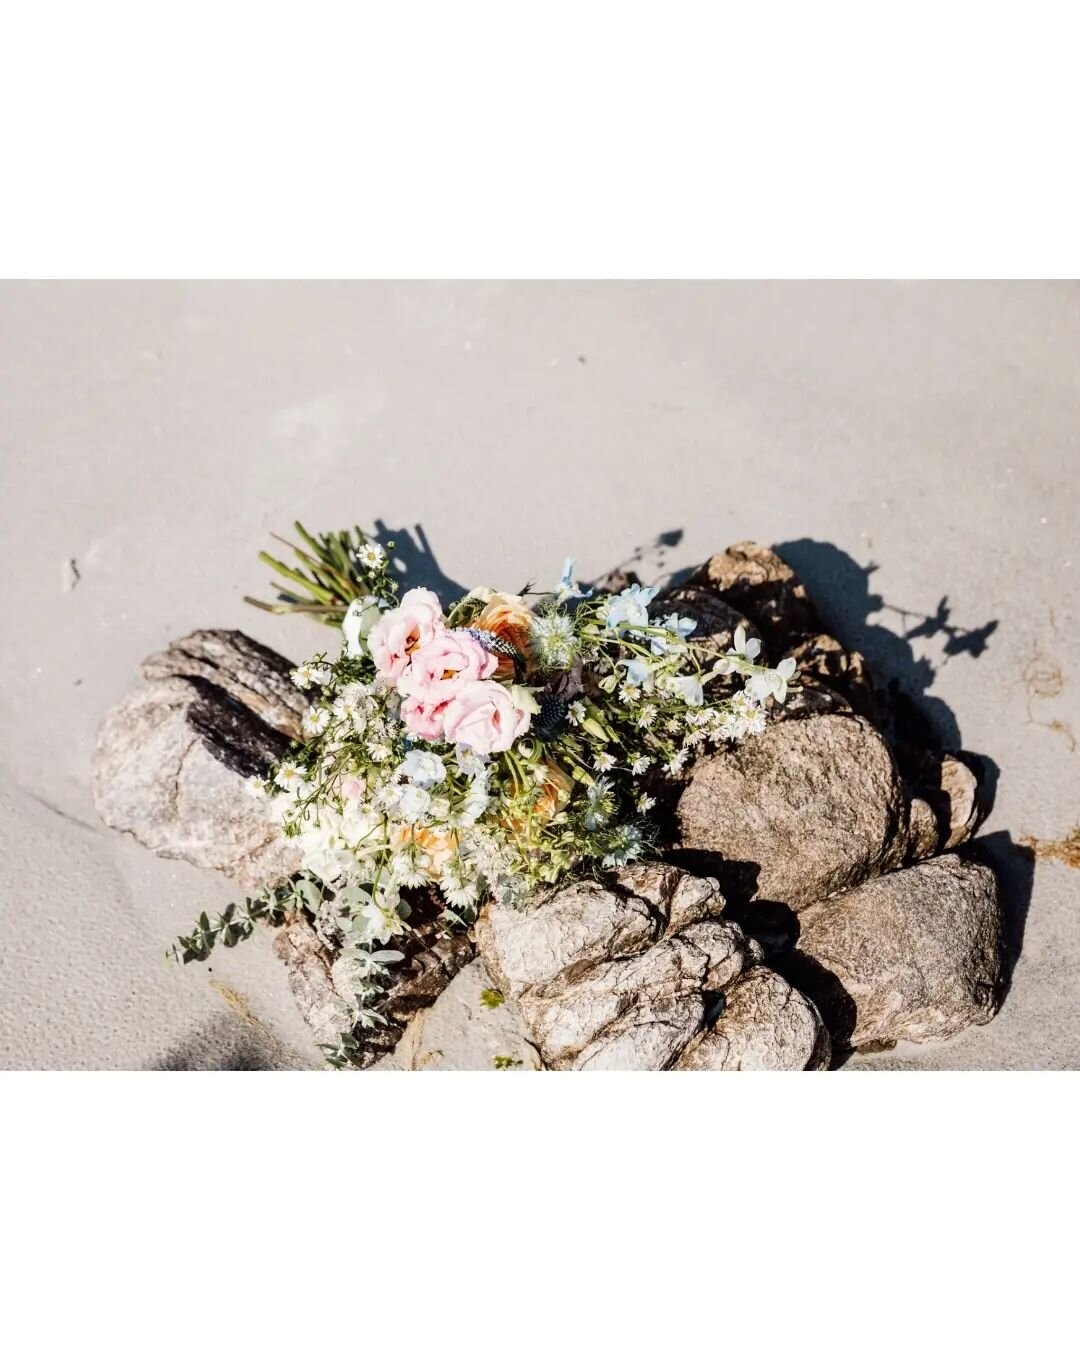 Beautiful bouquets from last year's weddings 🌸

@vividfloraldesign
@camomilecornflowers
@littlestemsinspiredbymargaret
@elizabeth_mulberry_flowers
@willowandwreathflorist
.
.
.
.
.
.
.
#weddingbouquet #bridalbouquet #weddingflowers #bridalflowers #b